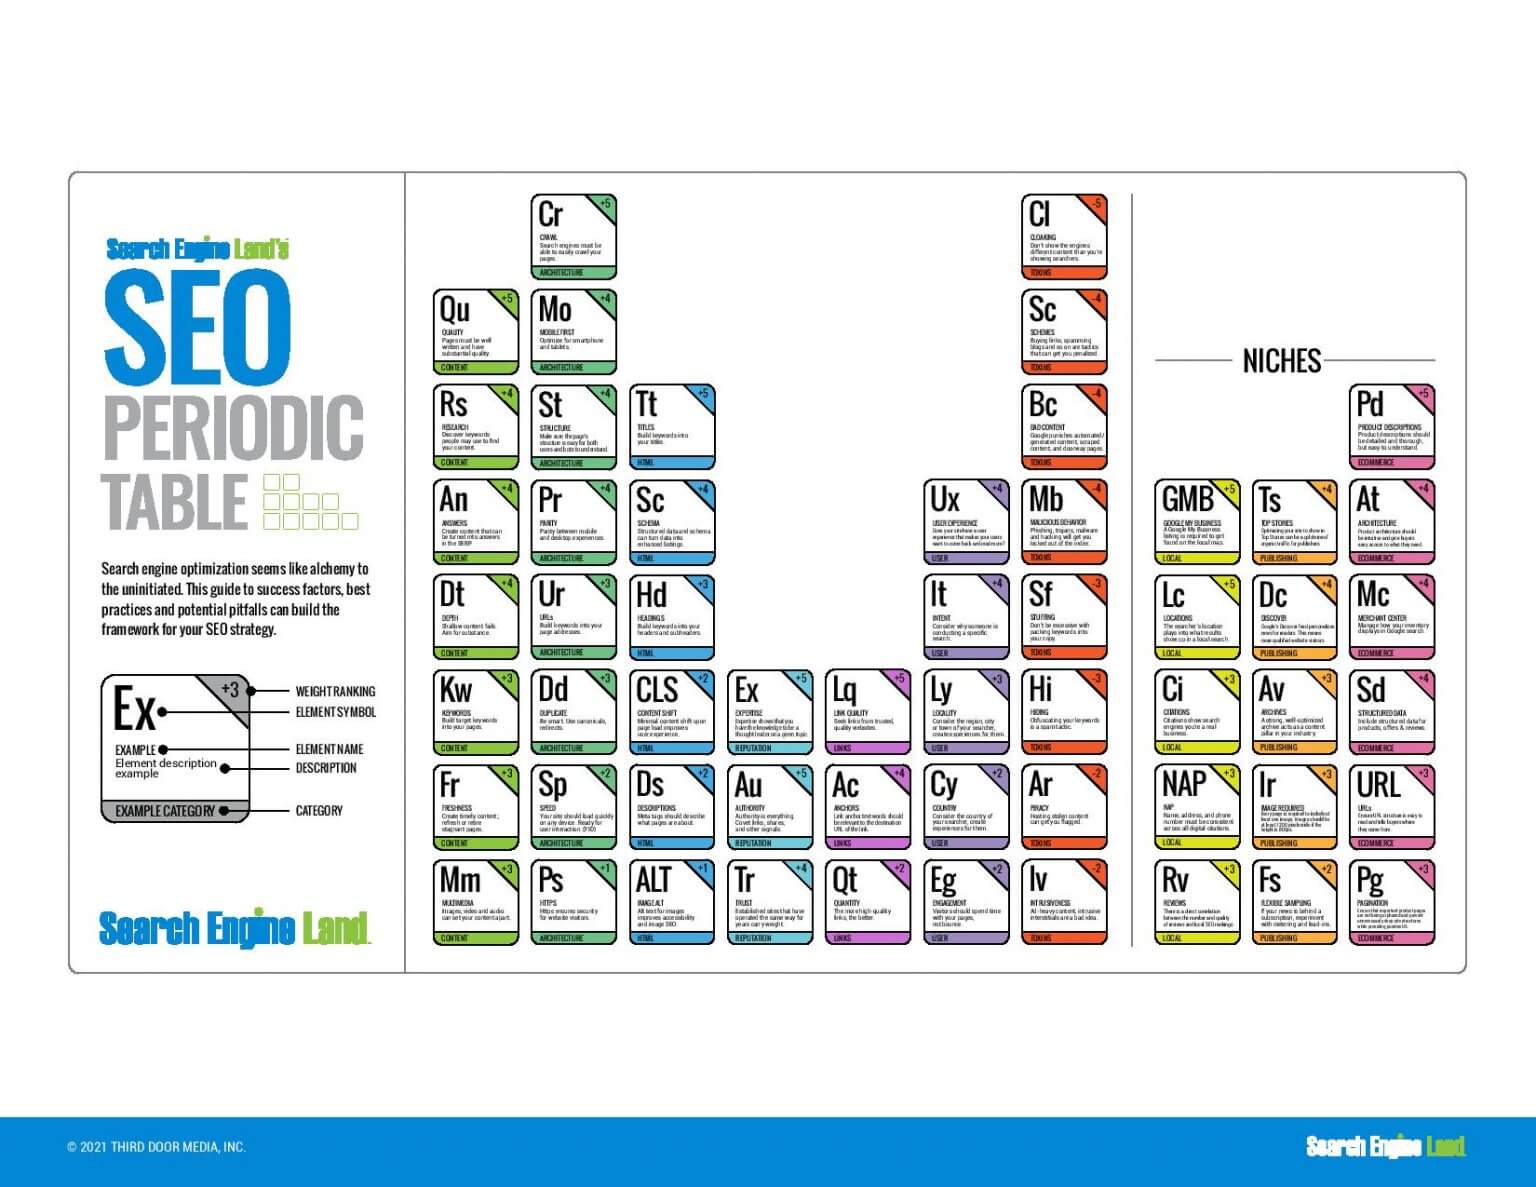 The periodic table of SEO David Hodder